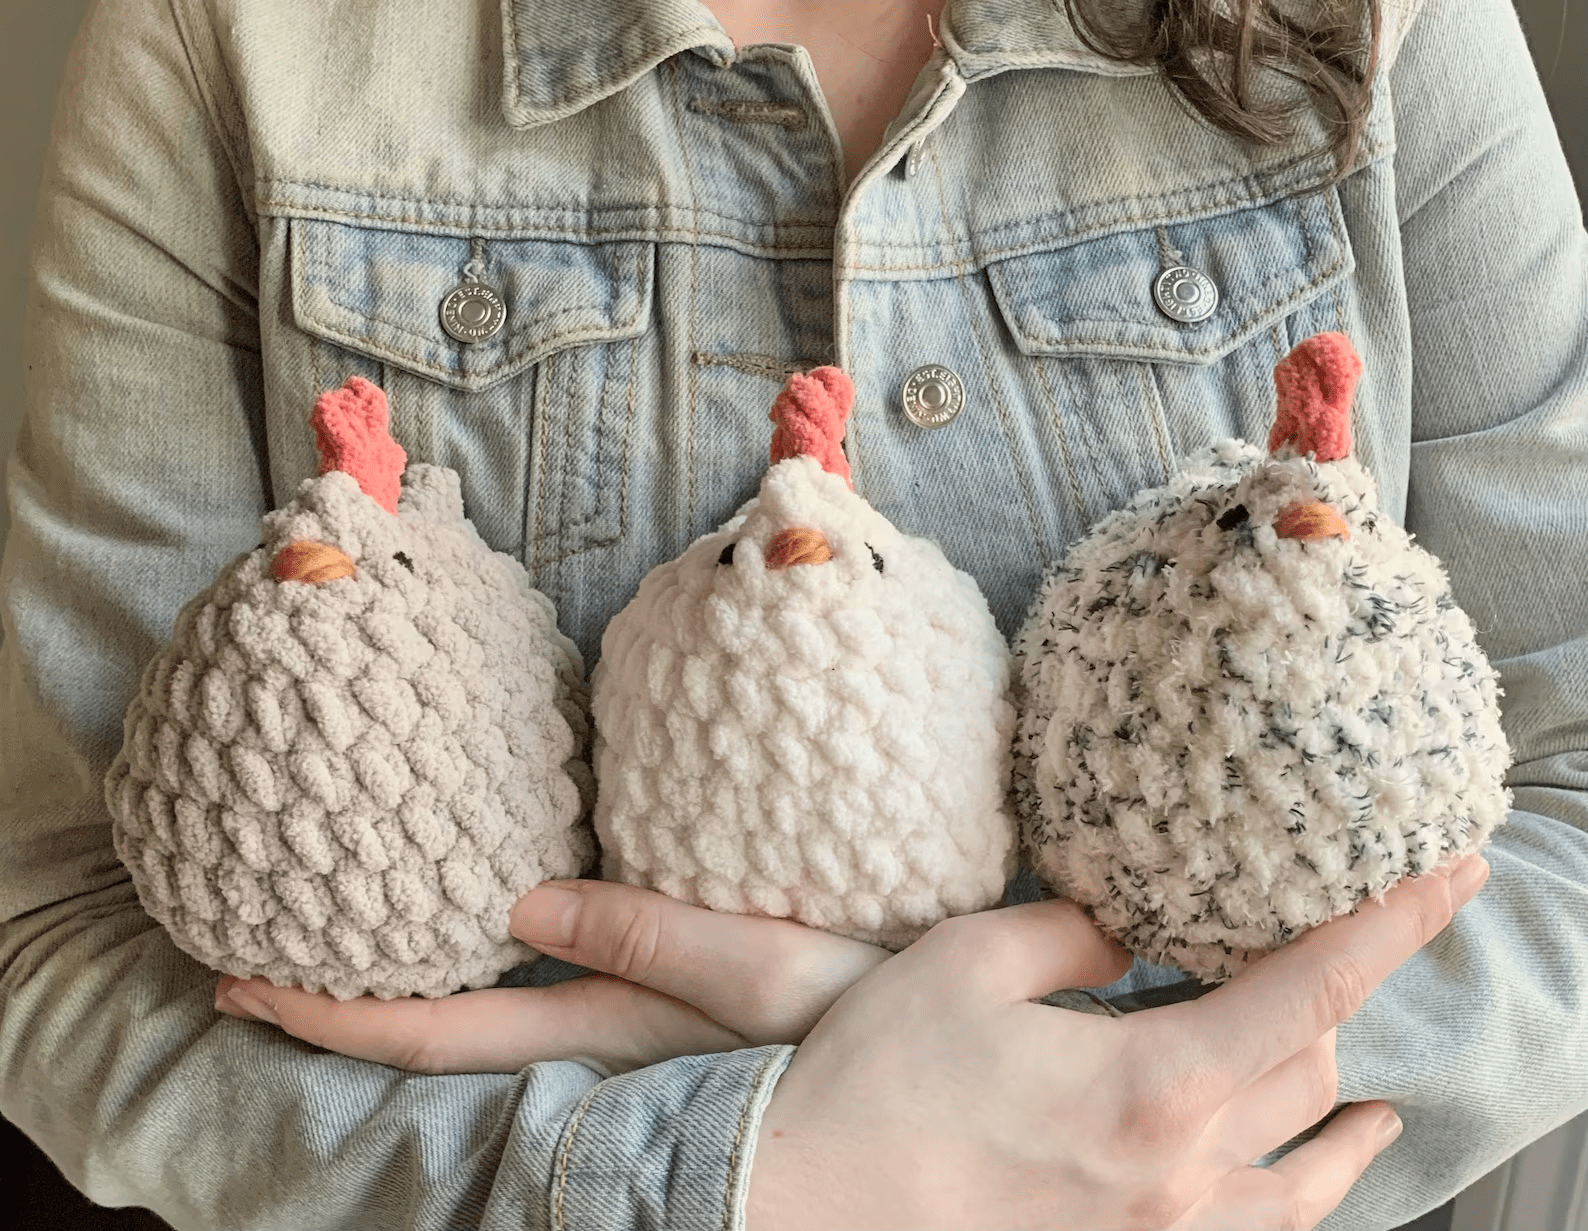 crochet chicken pattern